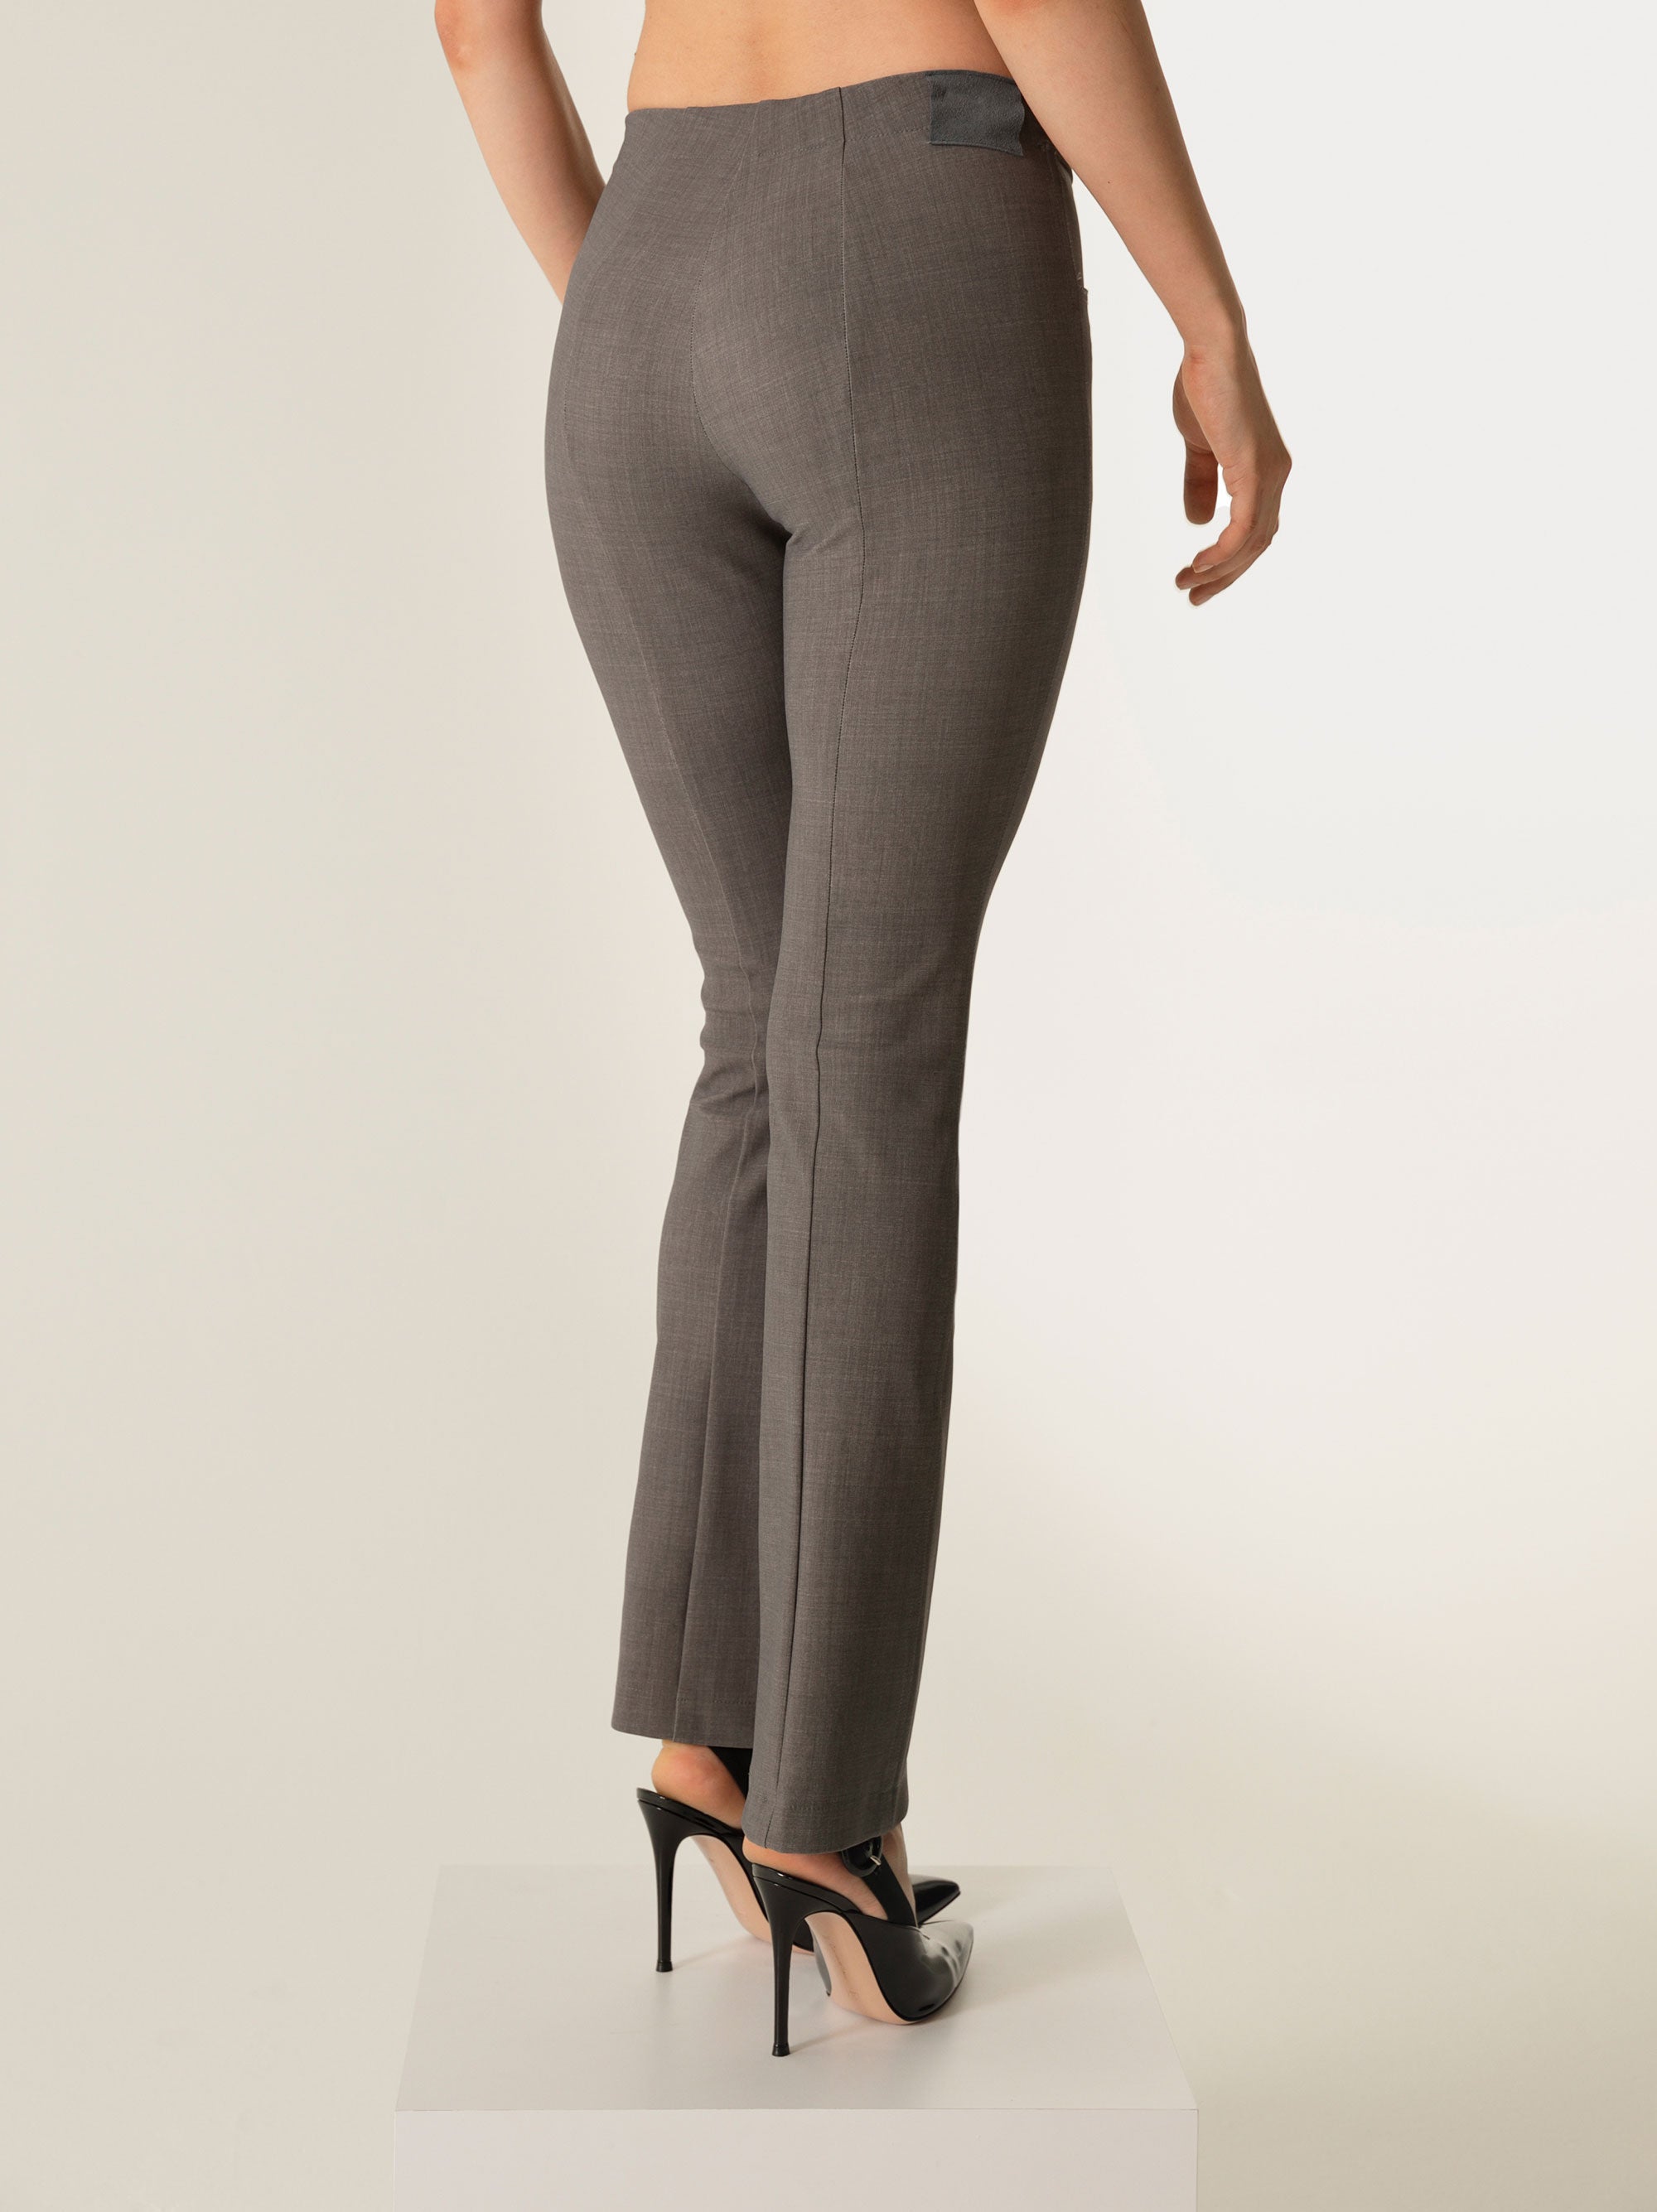  4 Pockets/Belt Loops,Extra Tall Womens Straight Leg Yoga  Dress Pant Work Pants Office Slacks,37,Khaki,Size L